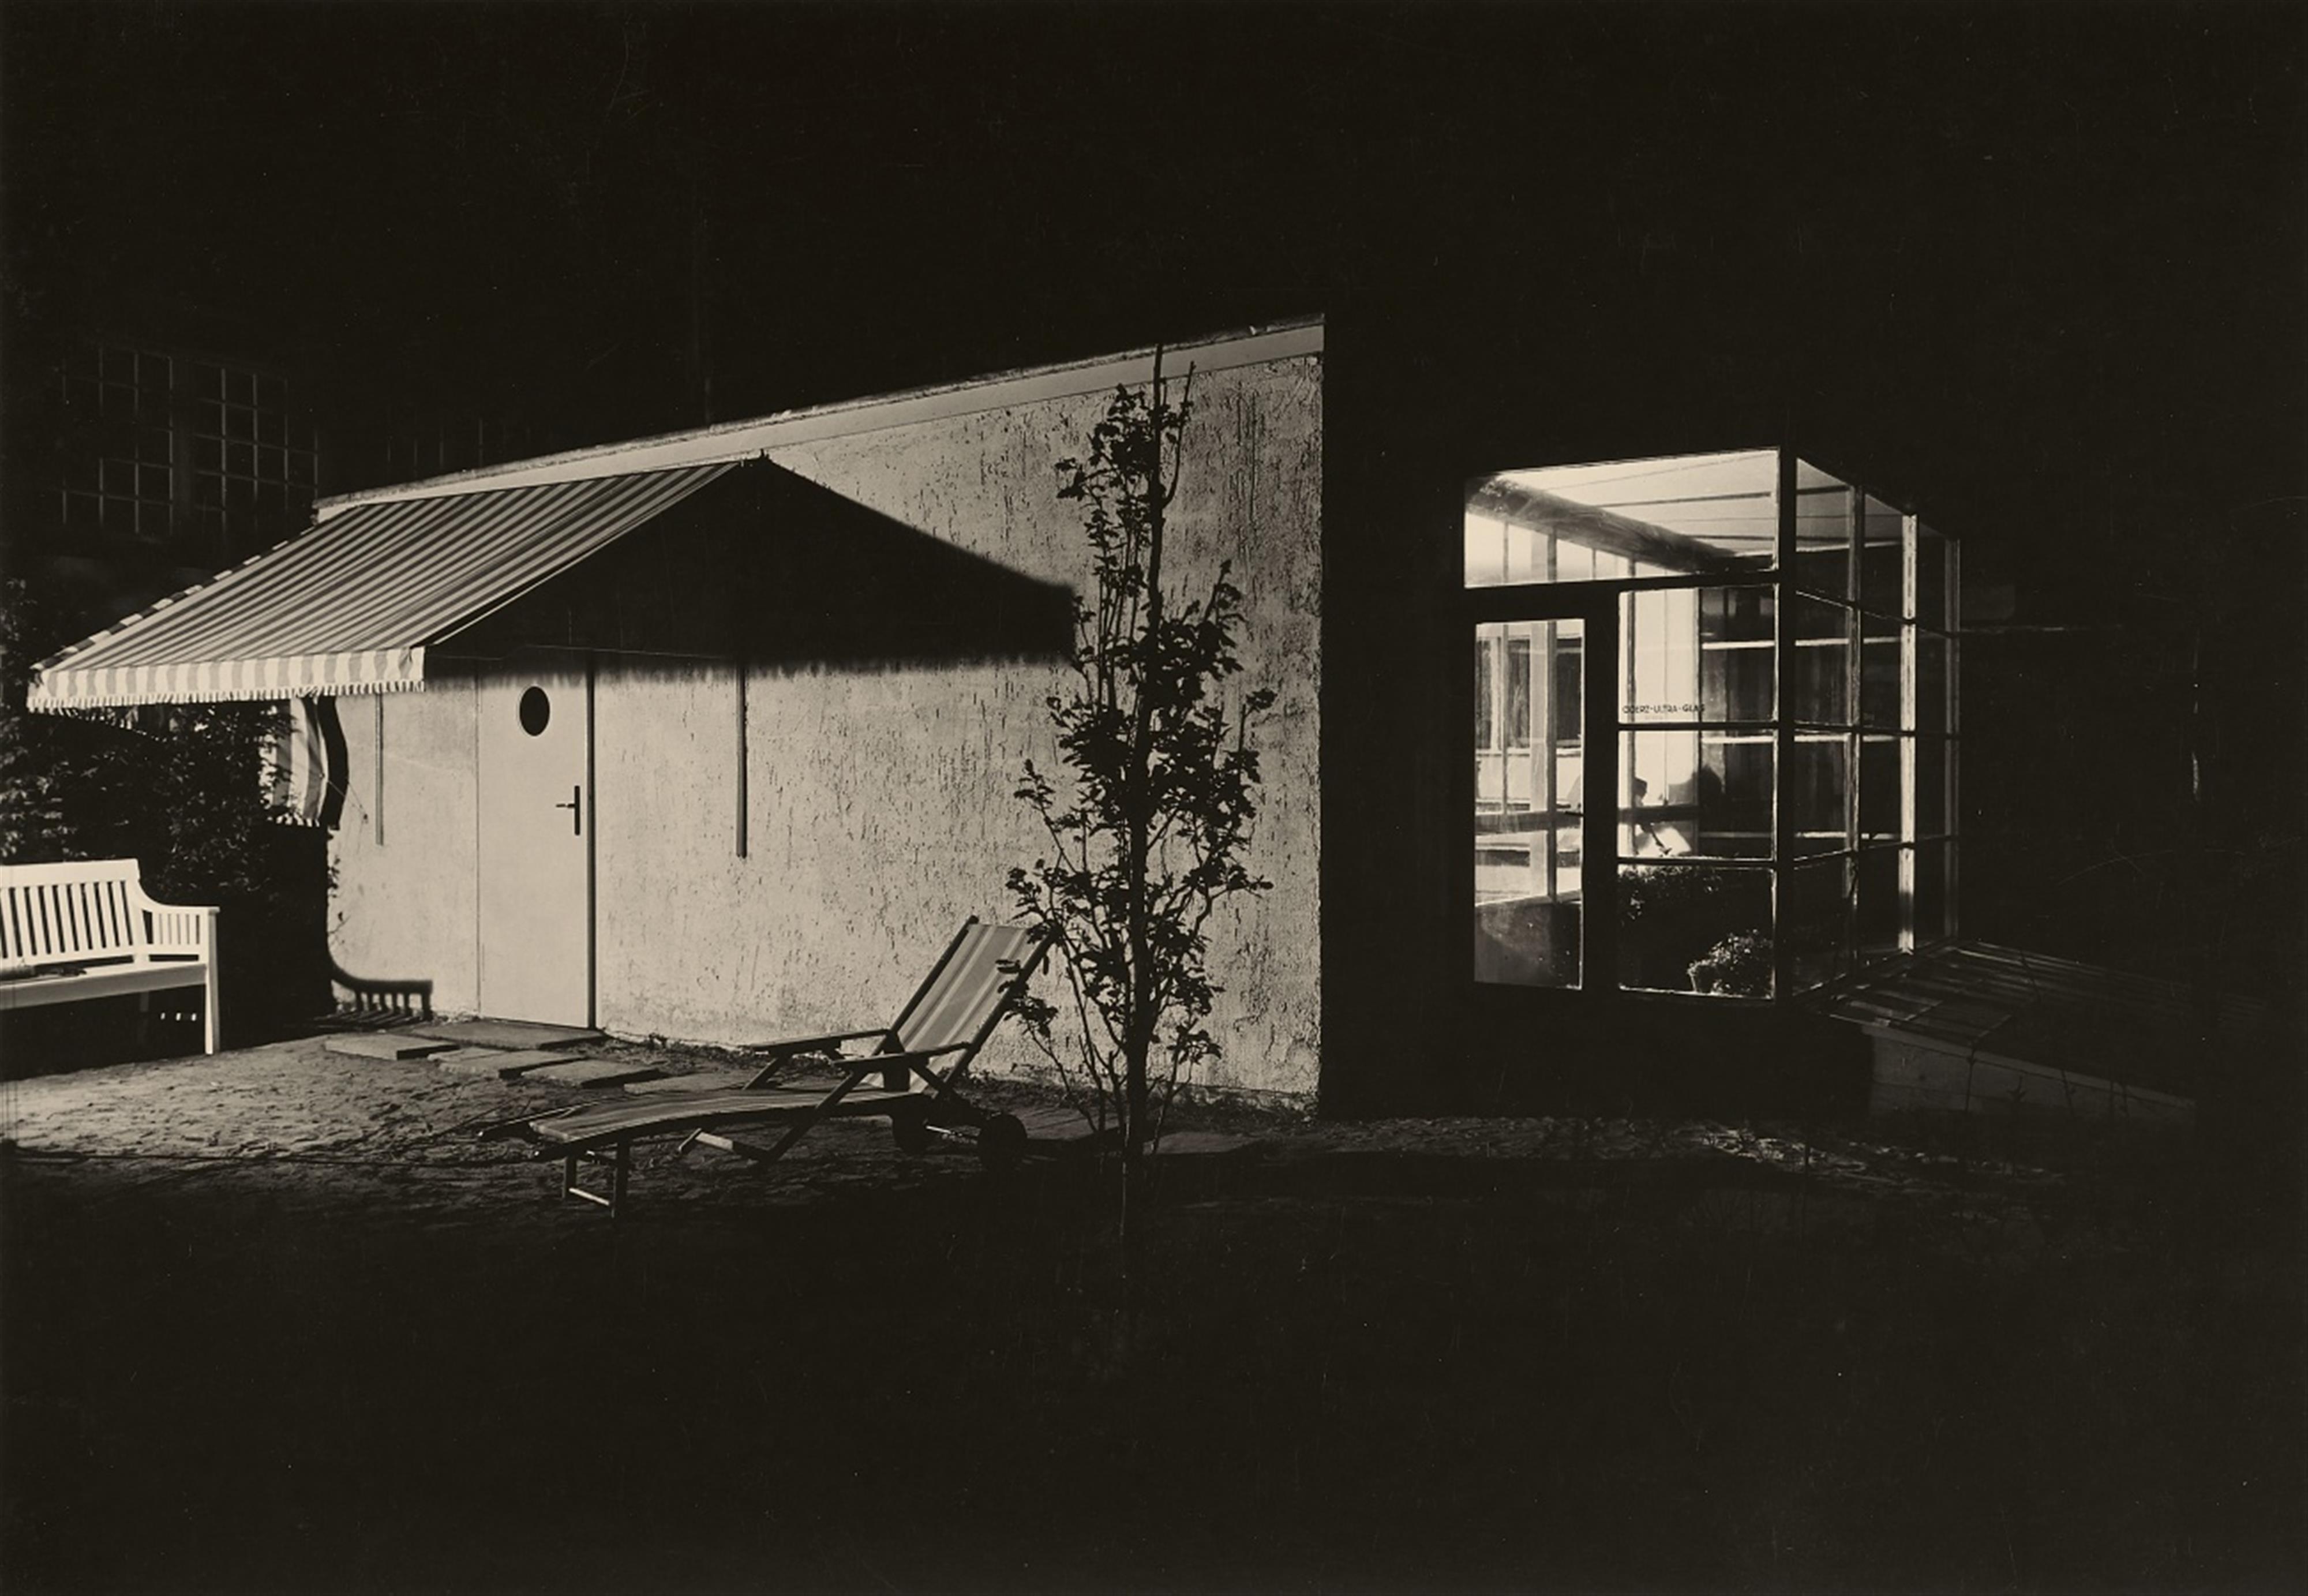 Arthur Koester
Leitner - Ausstellung "Das wachsende Haus", Berlin - image-6